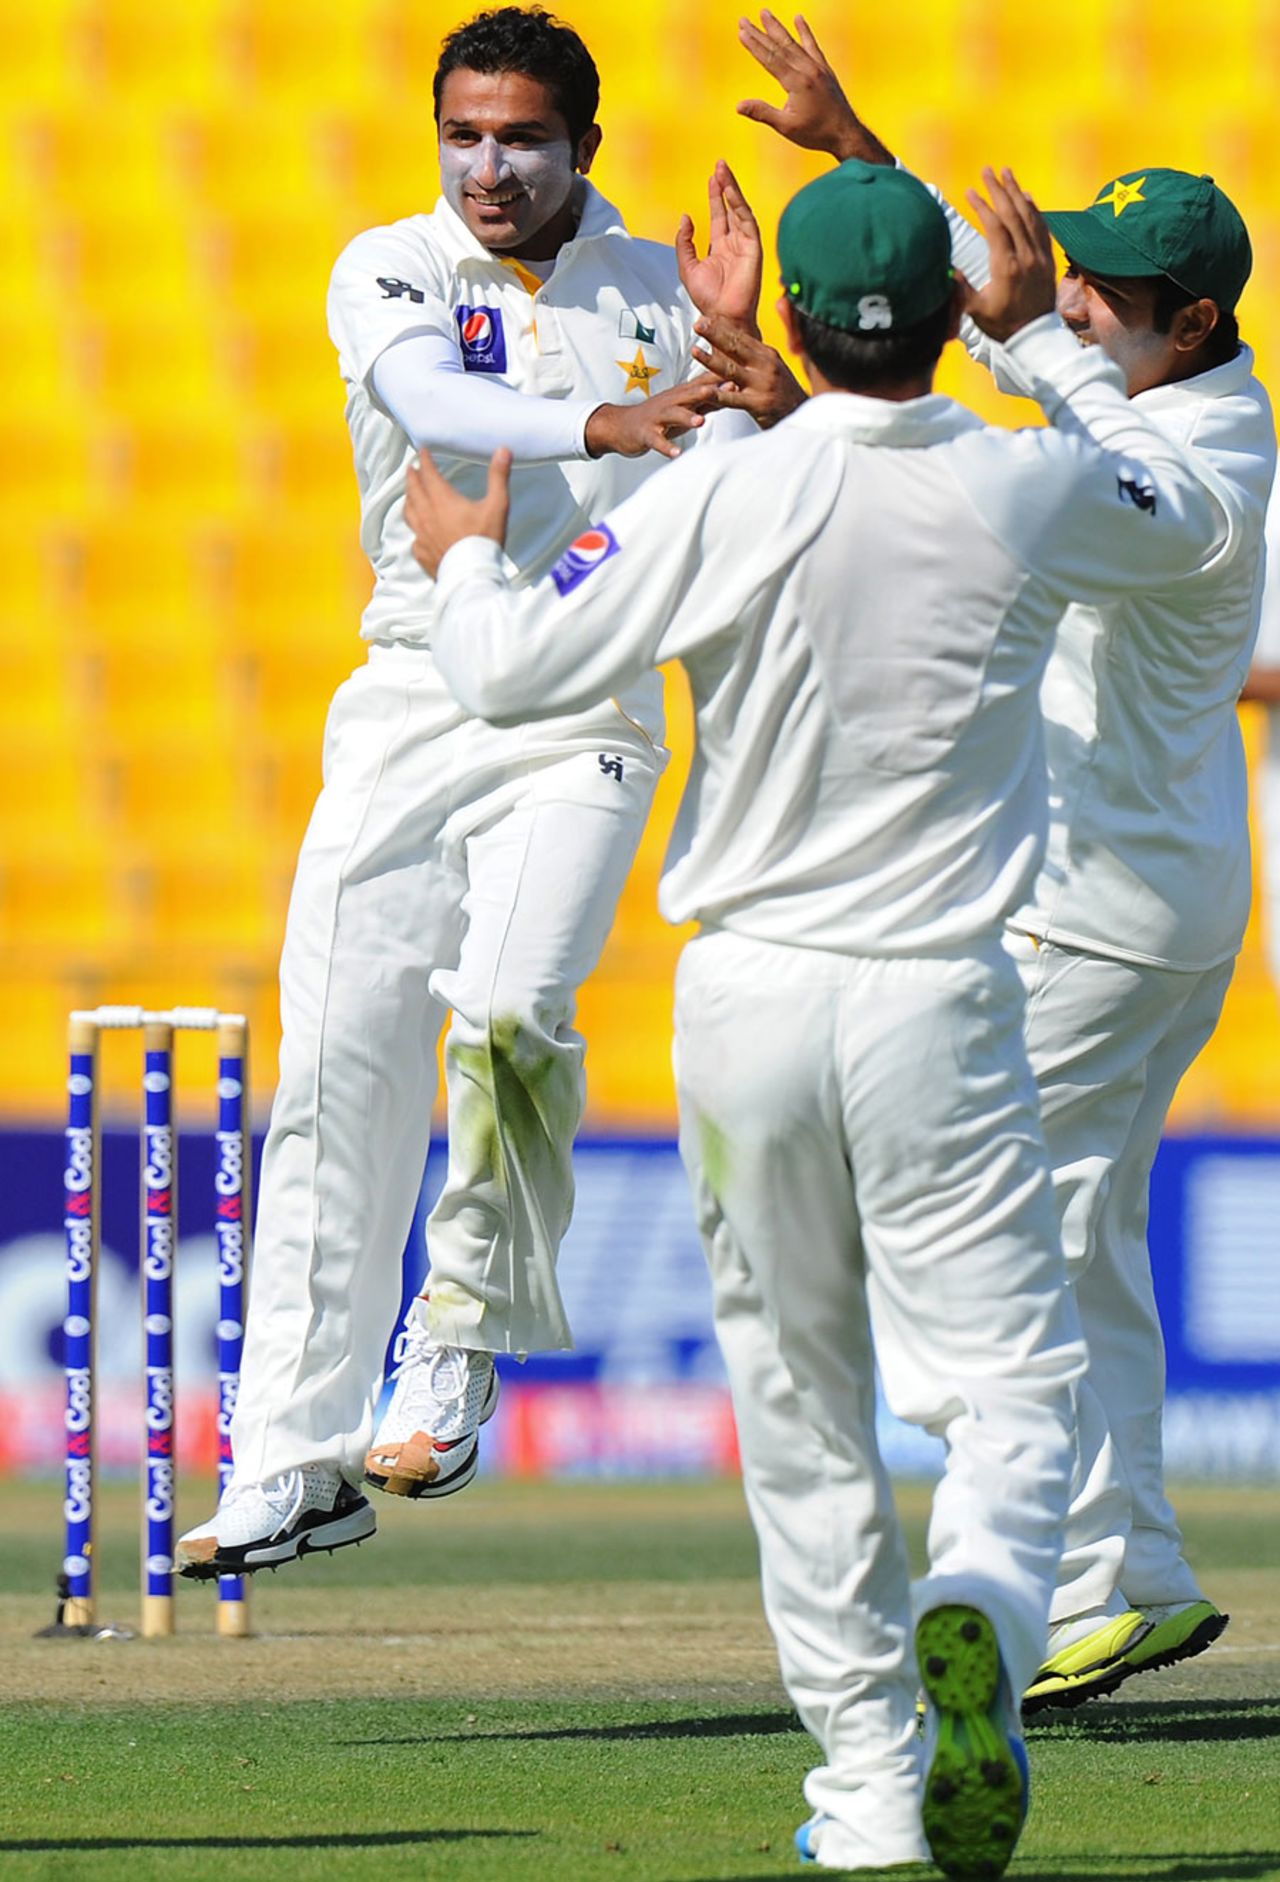 Bilawal Bhatti exults after a wicket, Pakistan v Sri Lanka, 1st Test, Abu Dhabi, 1st day, December 31, 2013